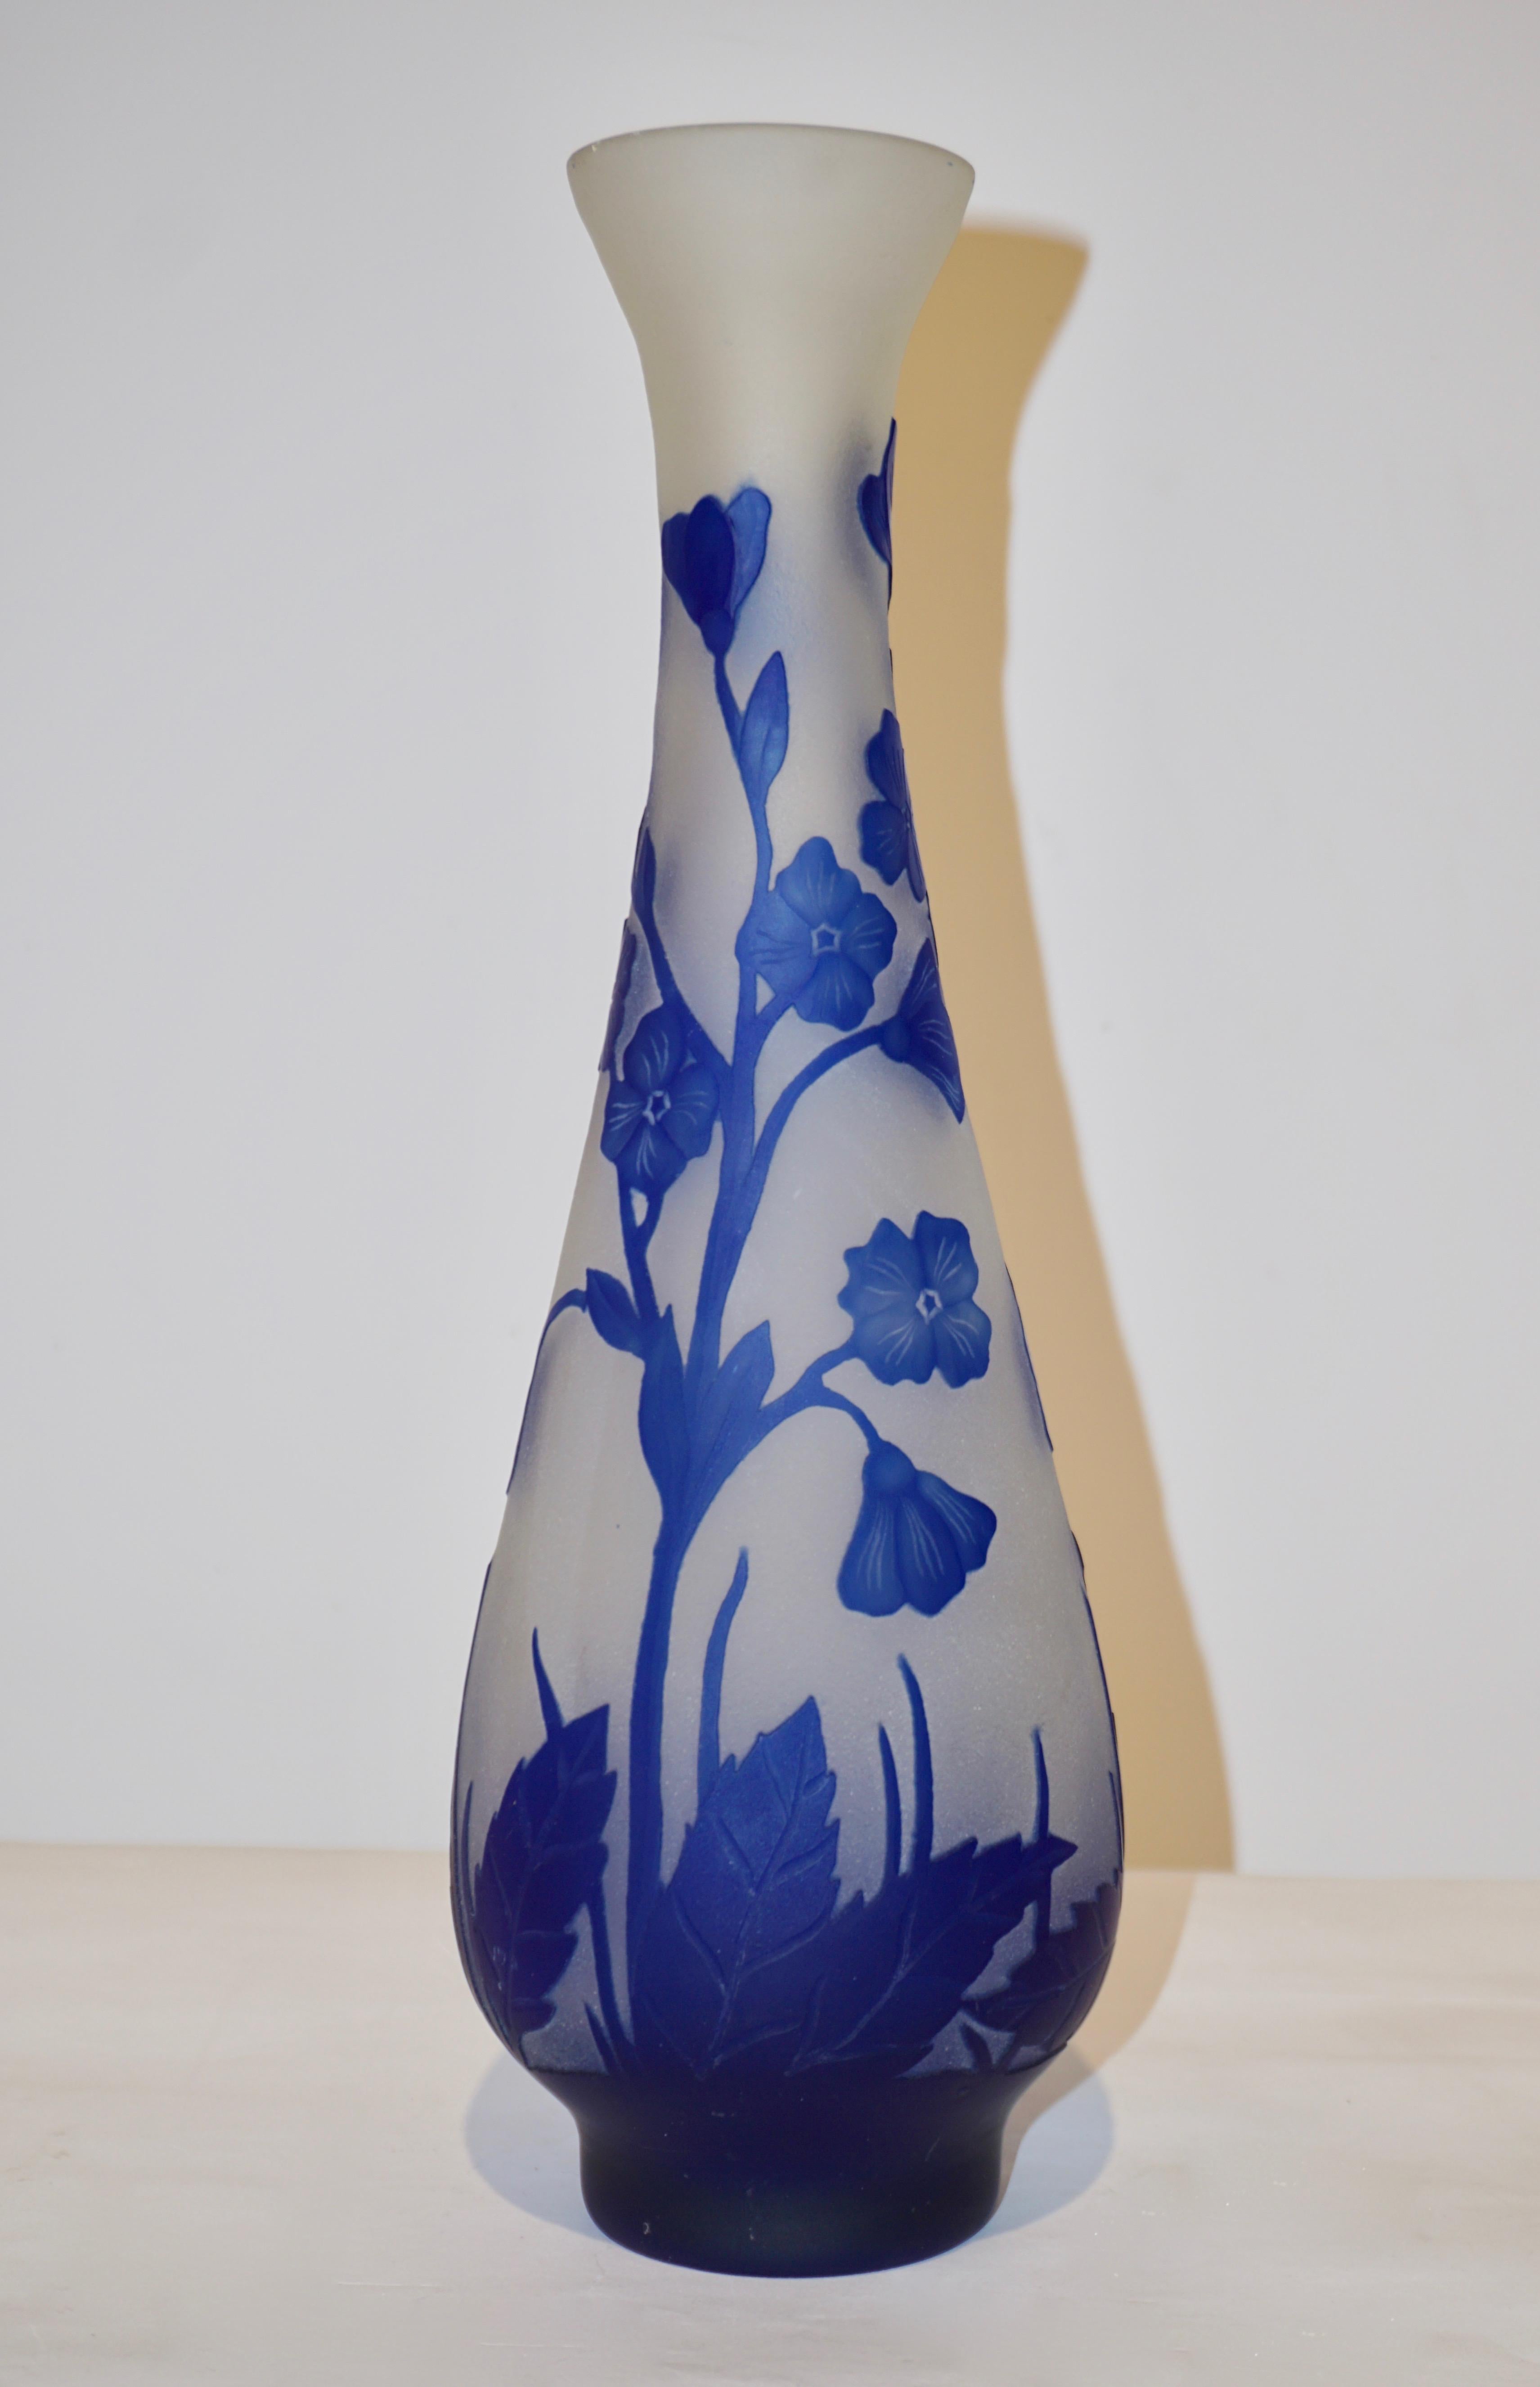 1970s Austrian Art Nouveau Style Crystal Glass Vase with Blue Flax Flowers 4